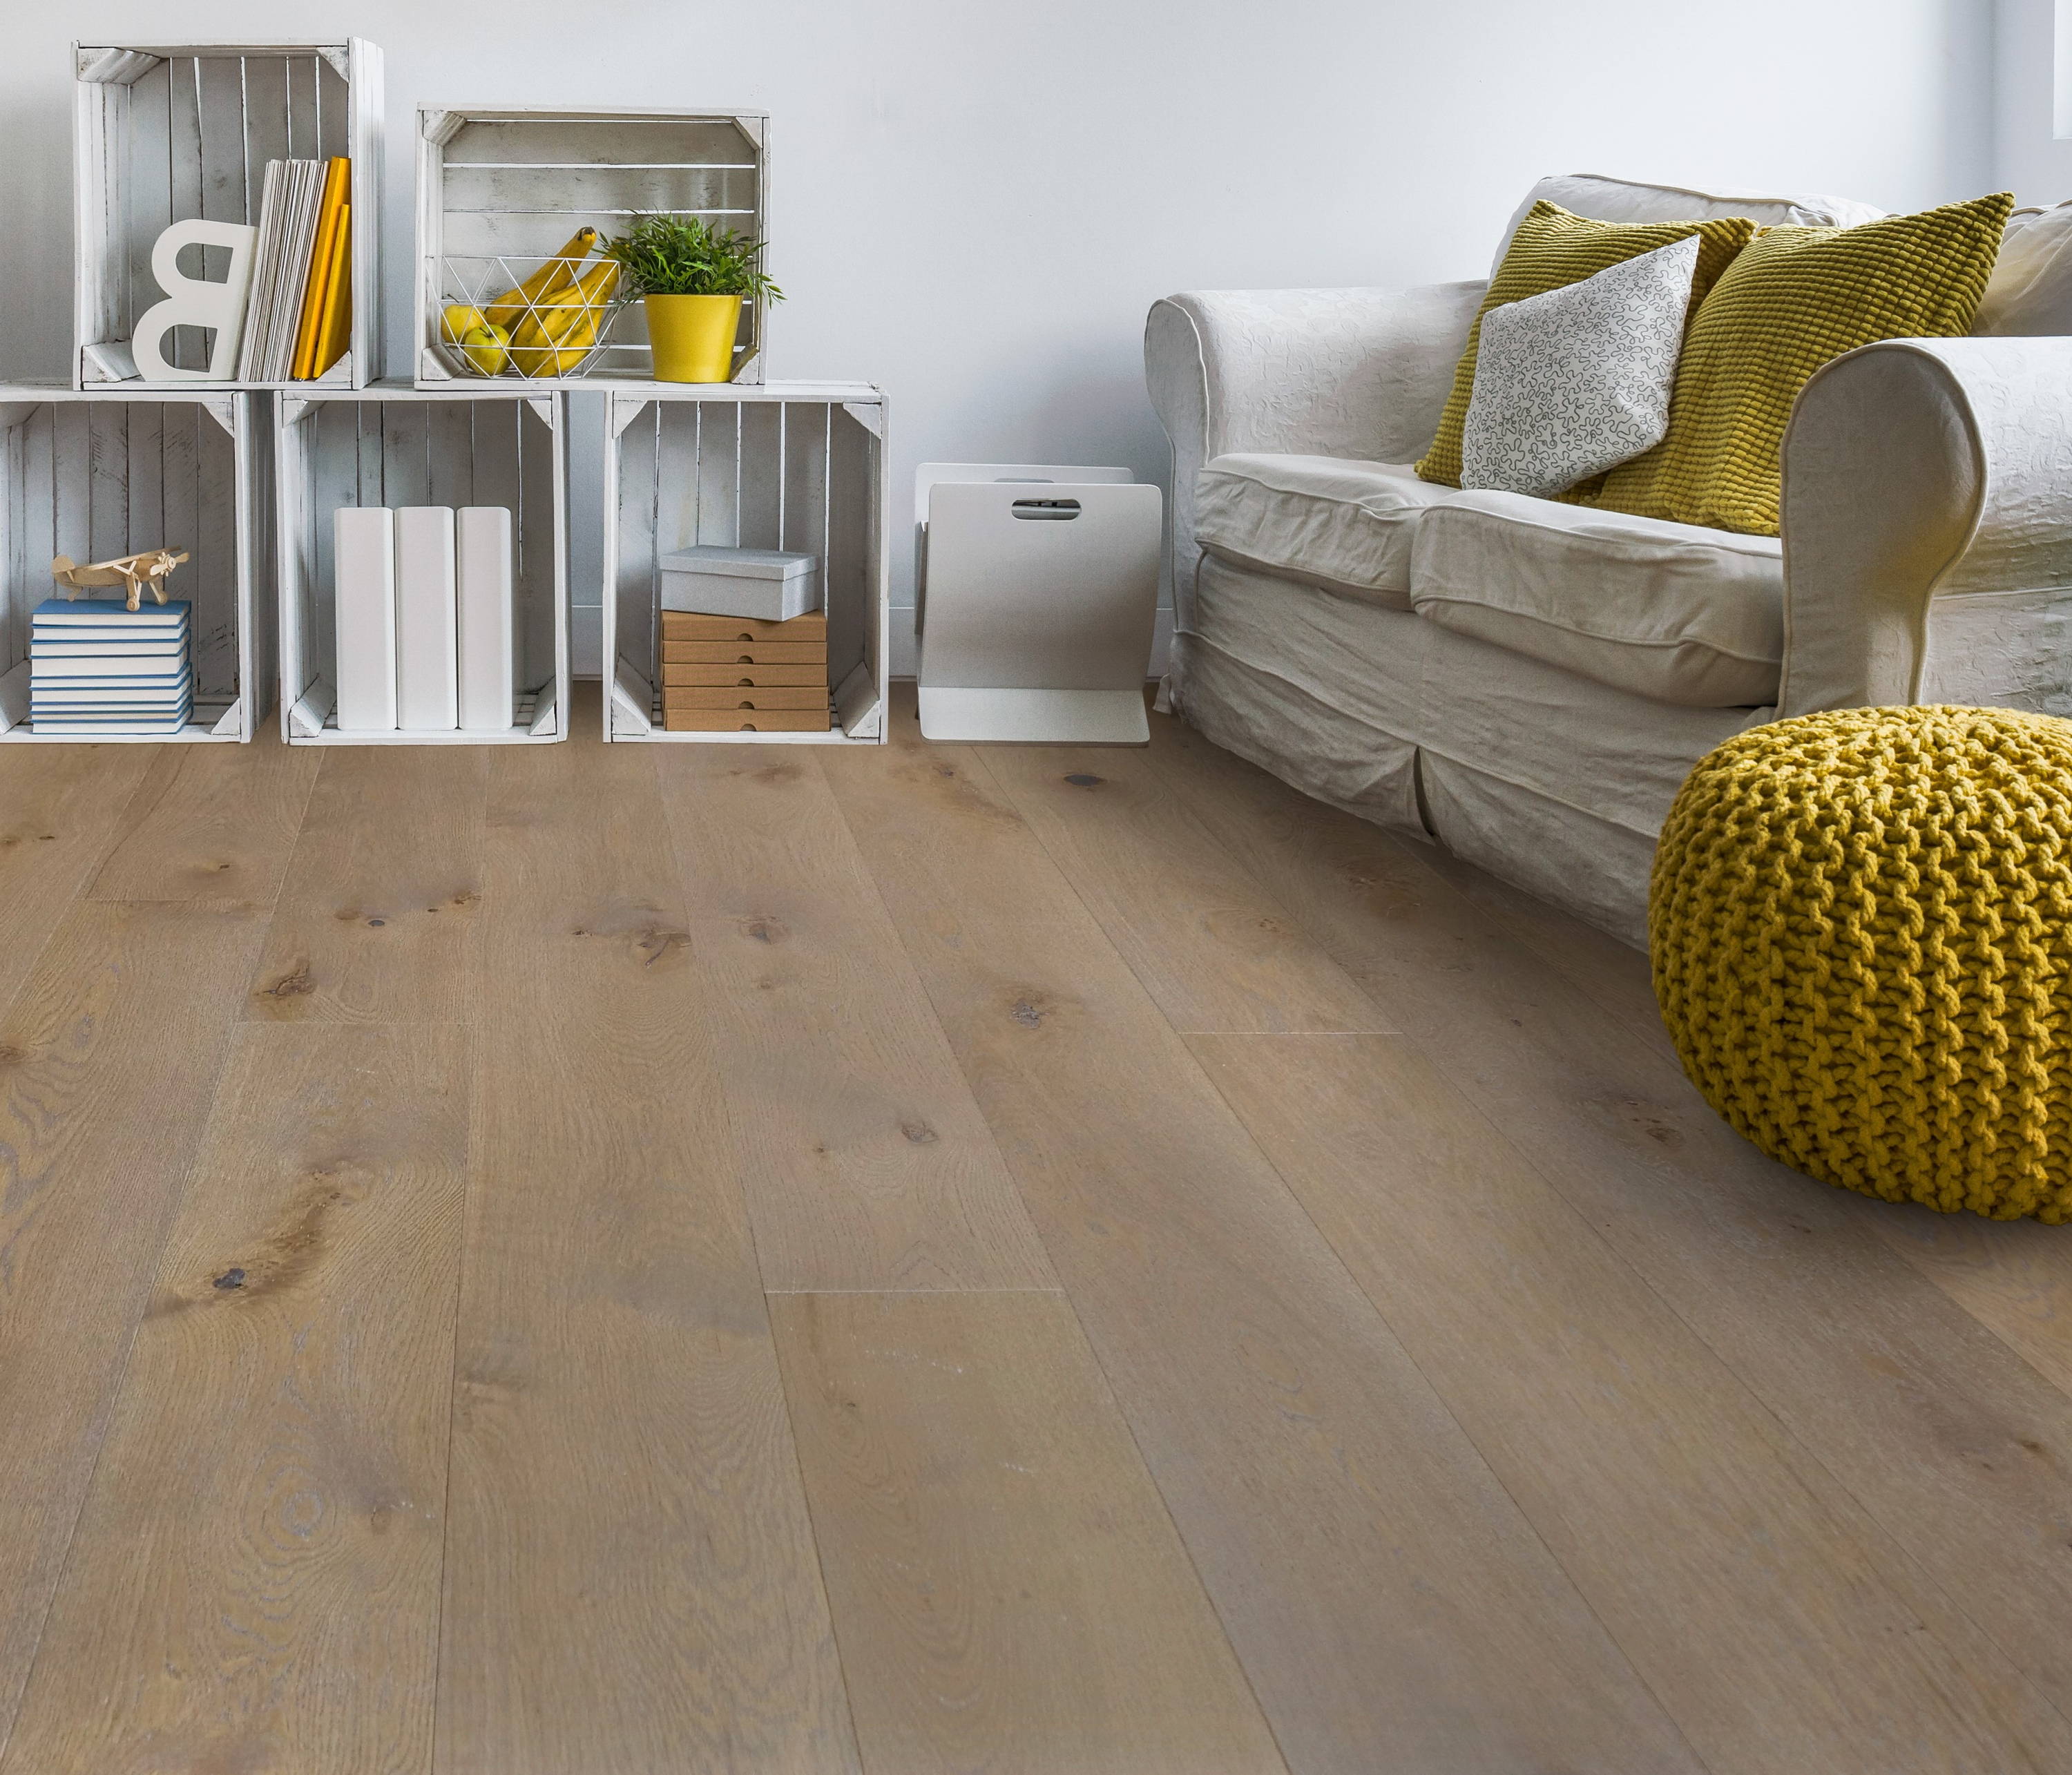 Hardwood Flooring Increase, Affordable Hardwood Floors Increase Home Value